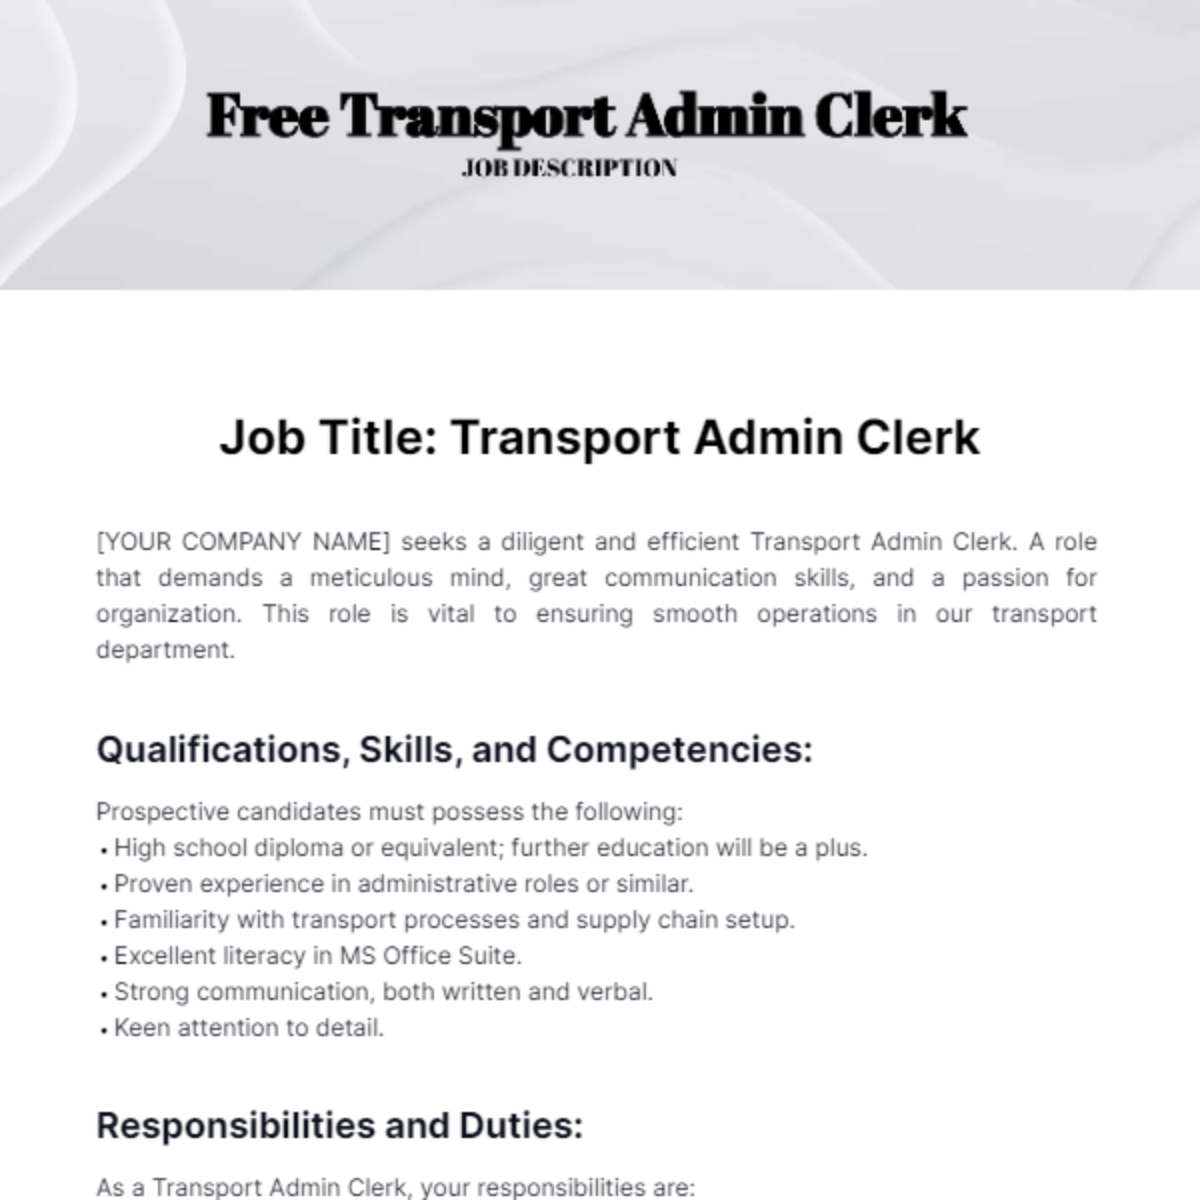 Transport Admin Clerk Job Description Template